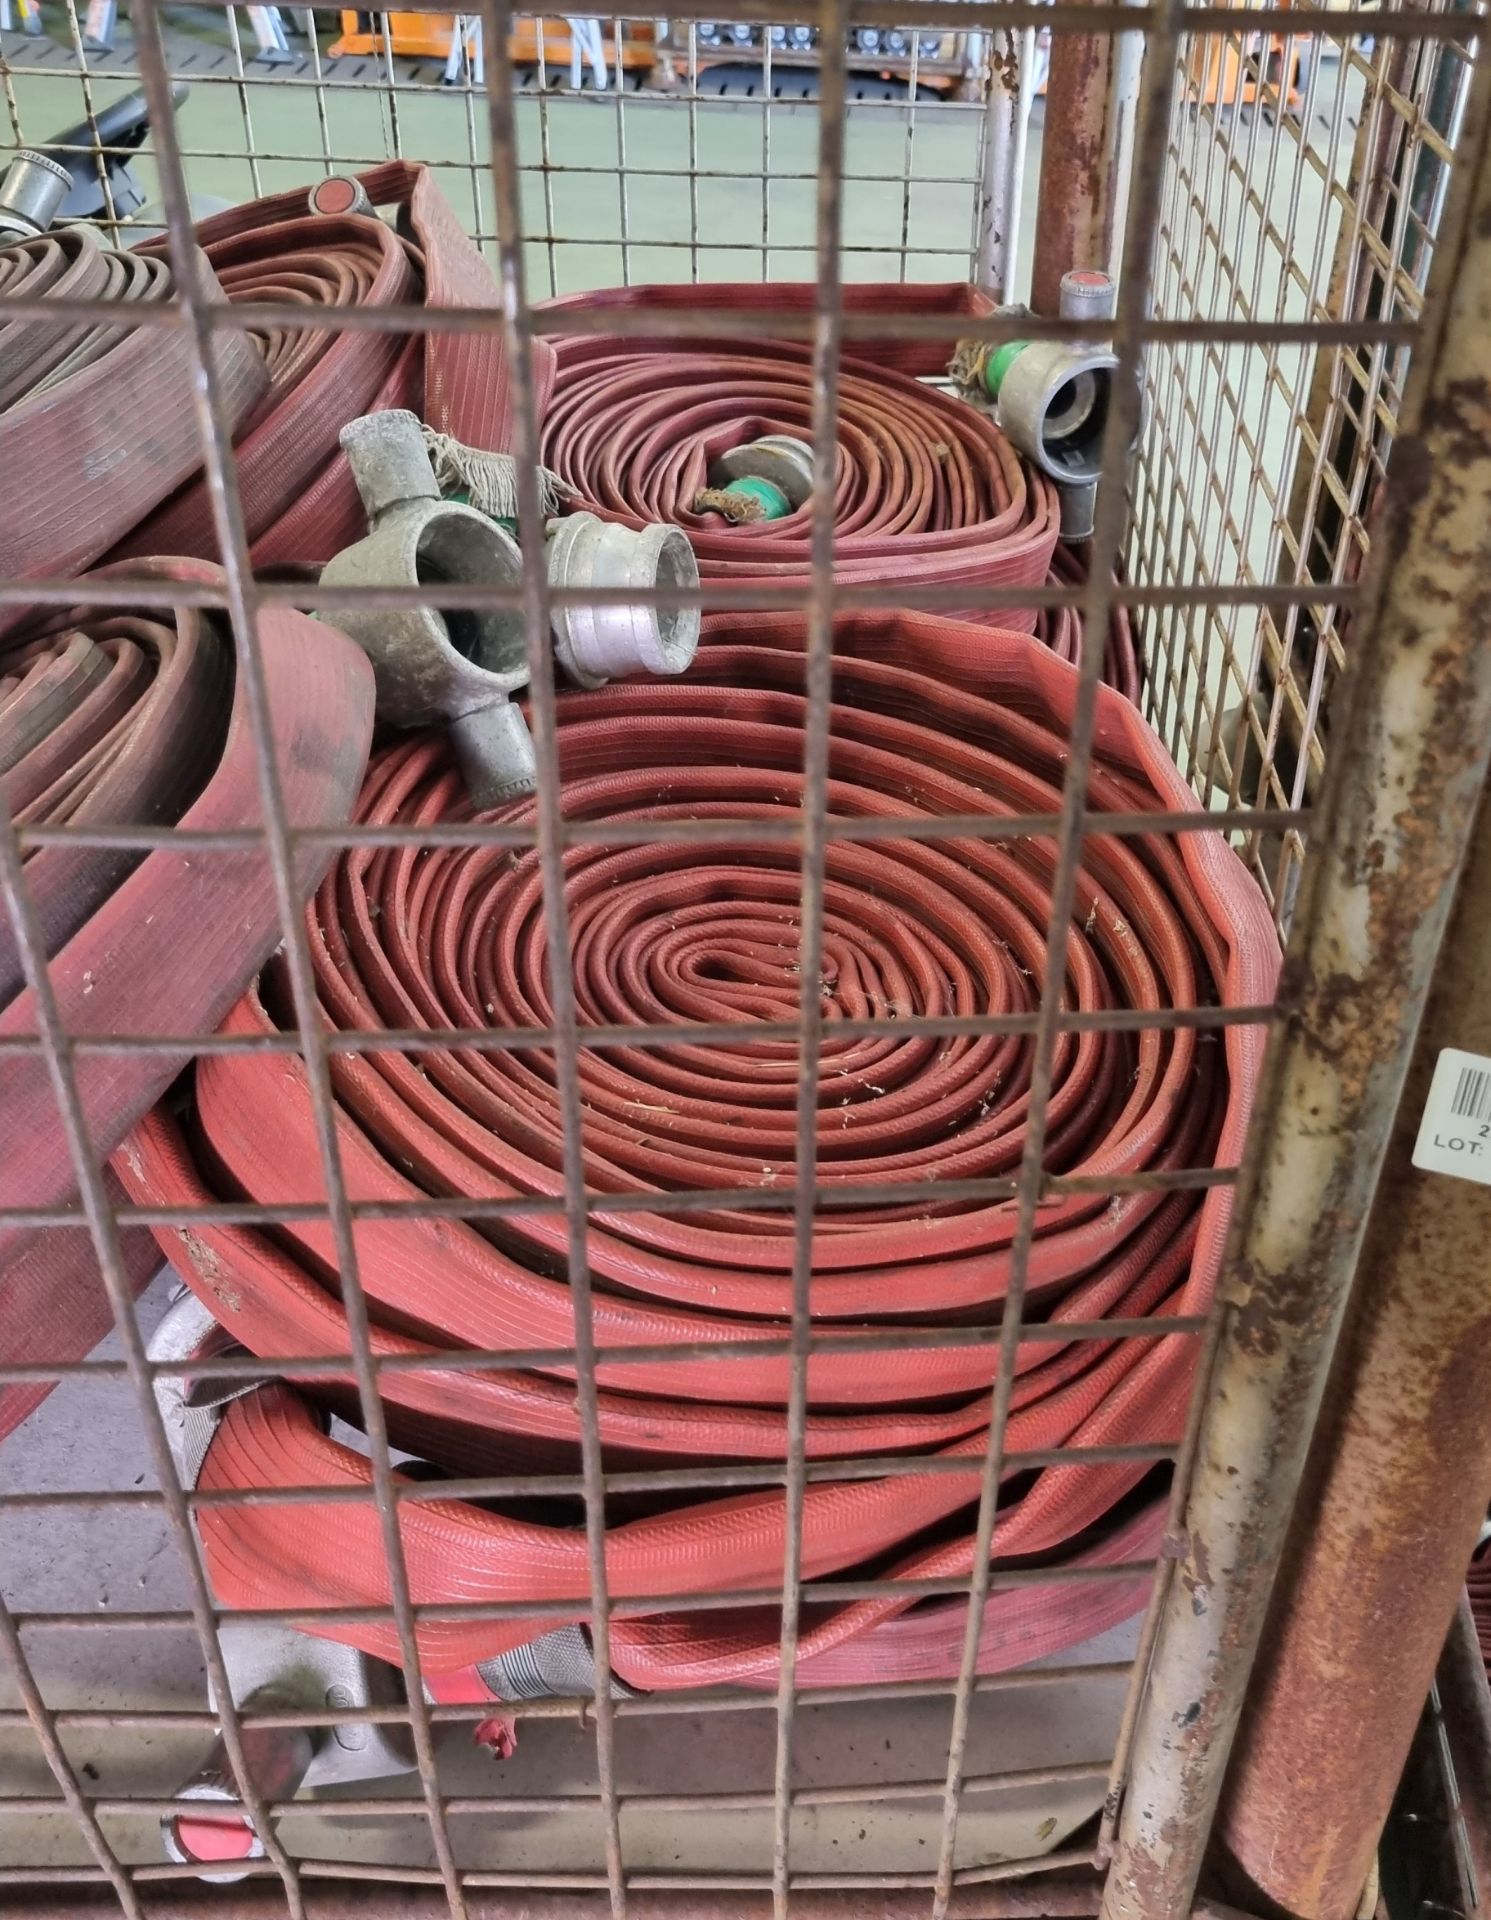 13x Layflat hose with couplings - 45mm diameter, 20m length (estimate) - Image 2 of 3